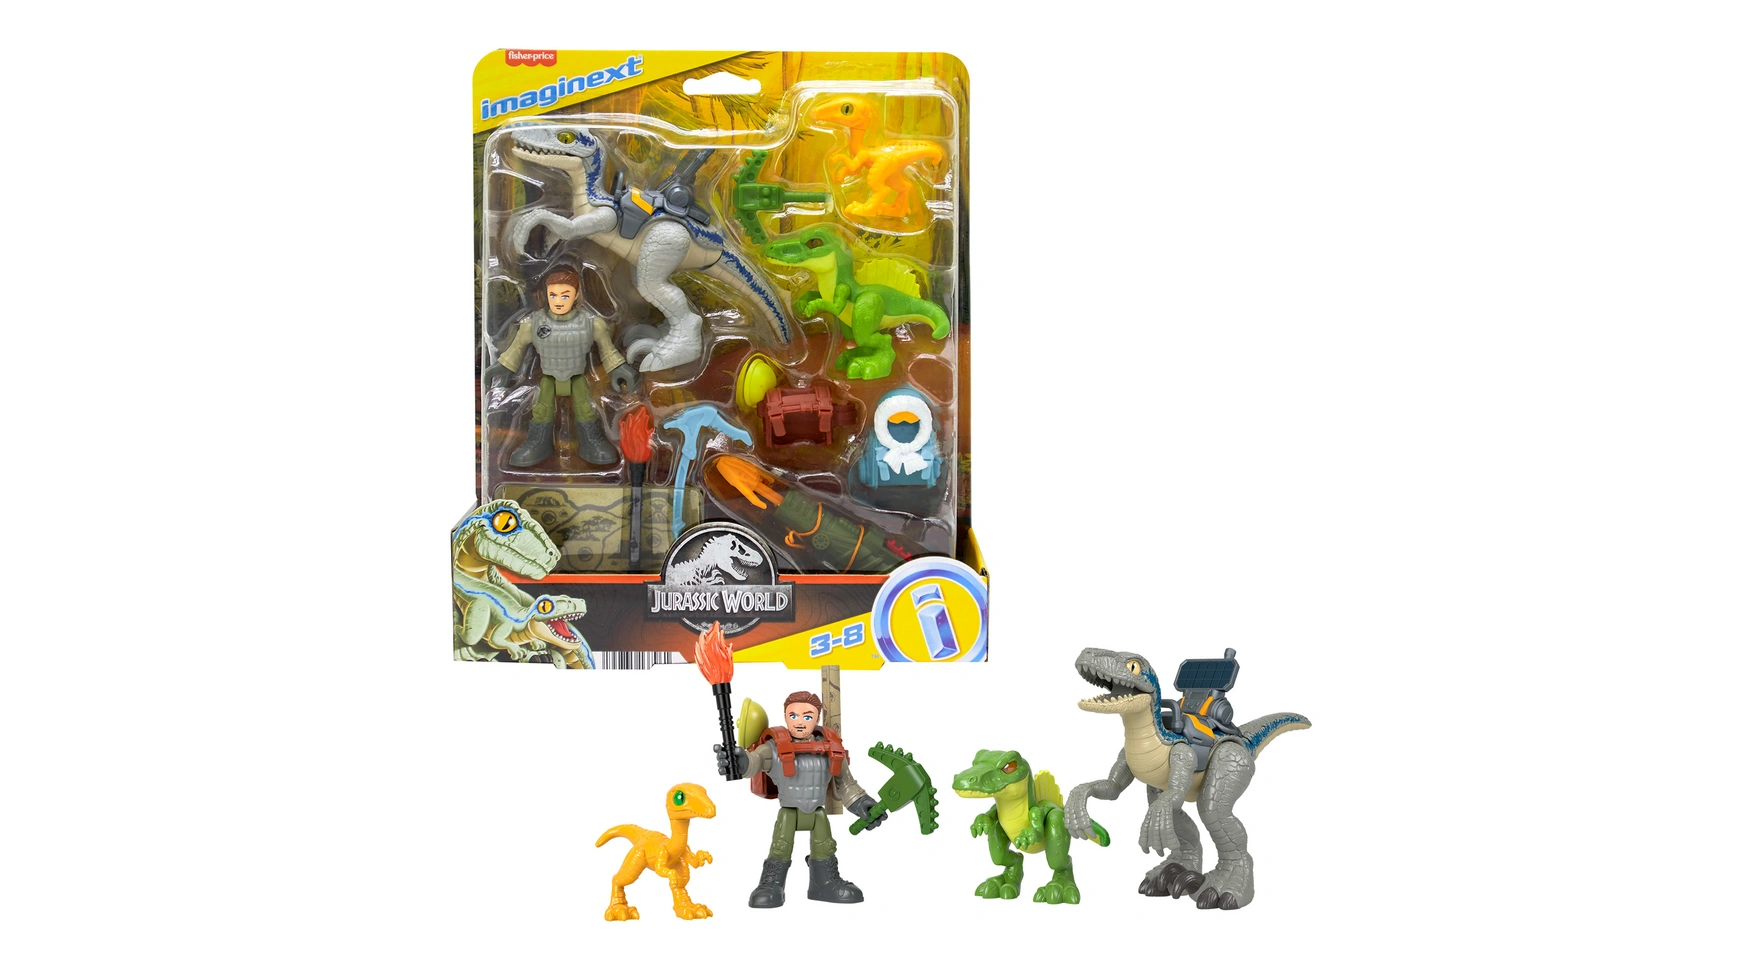 Imaginext Jurassic World Outdoor Adventure Dinopack конструктор мир динозавров jurassic world нападение барионикса 69029 368 деталей